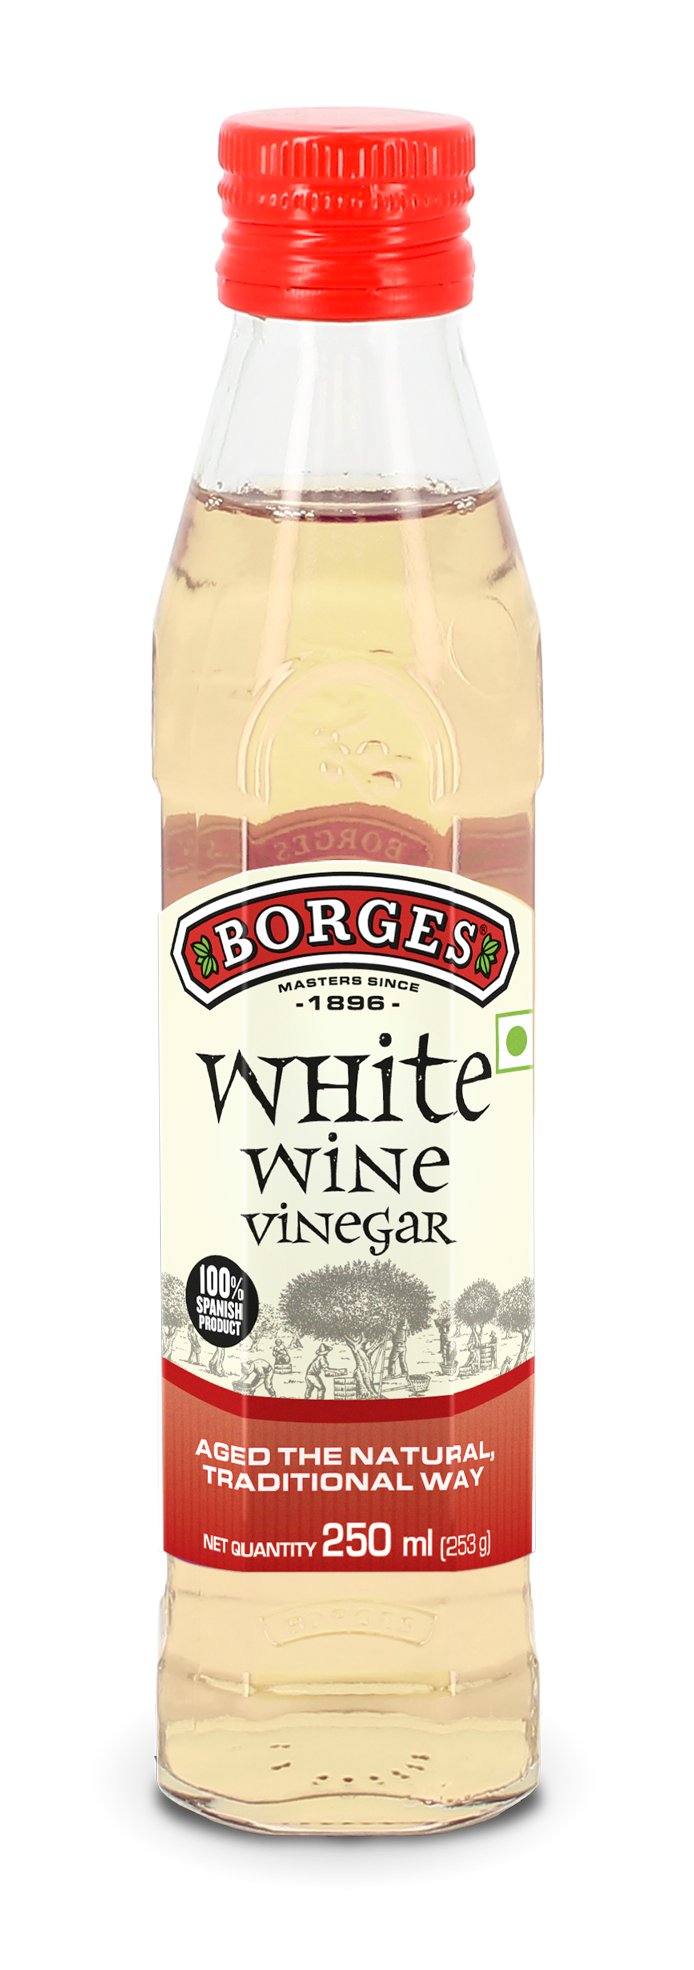 Borges white wine vinegar